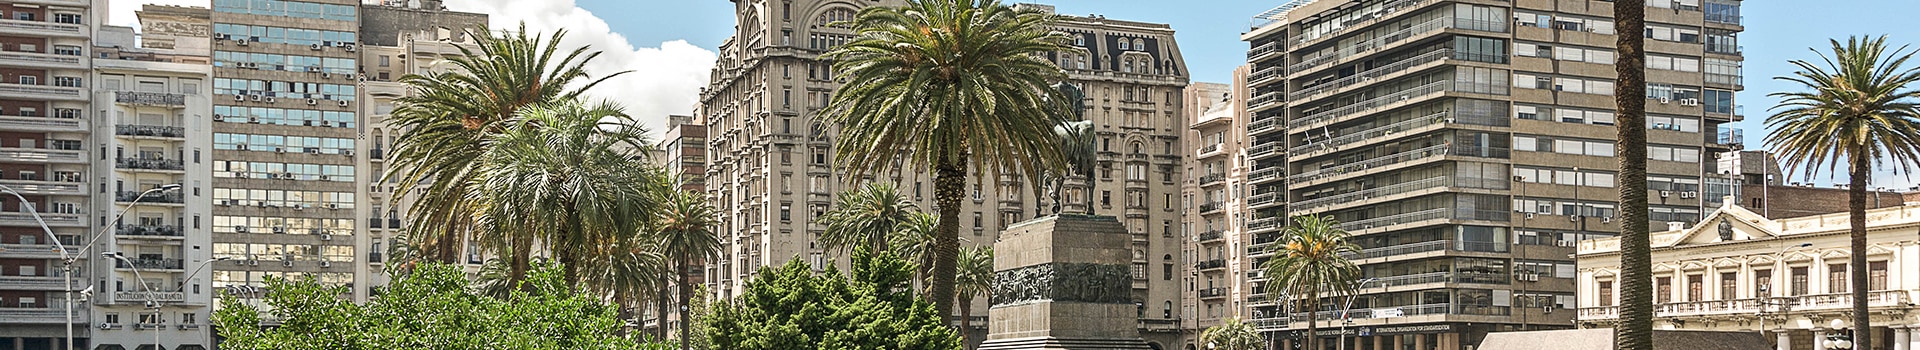 Porto alegre - Montevideo